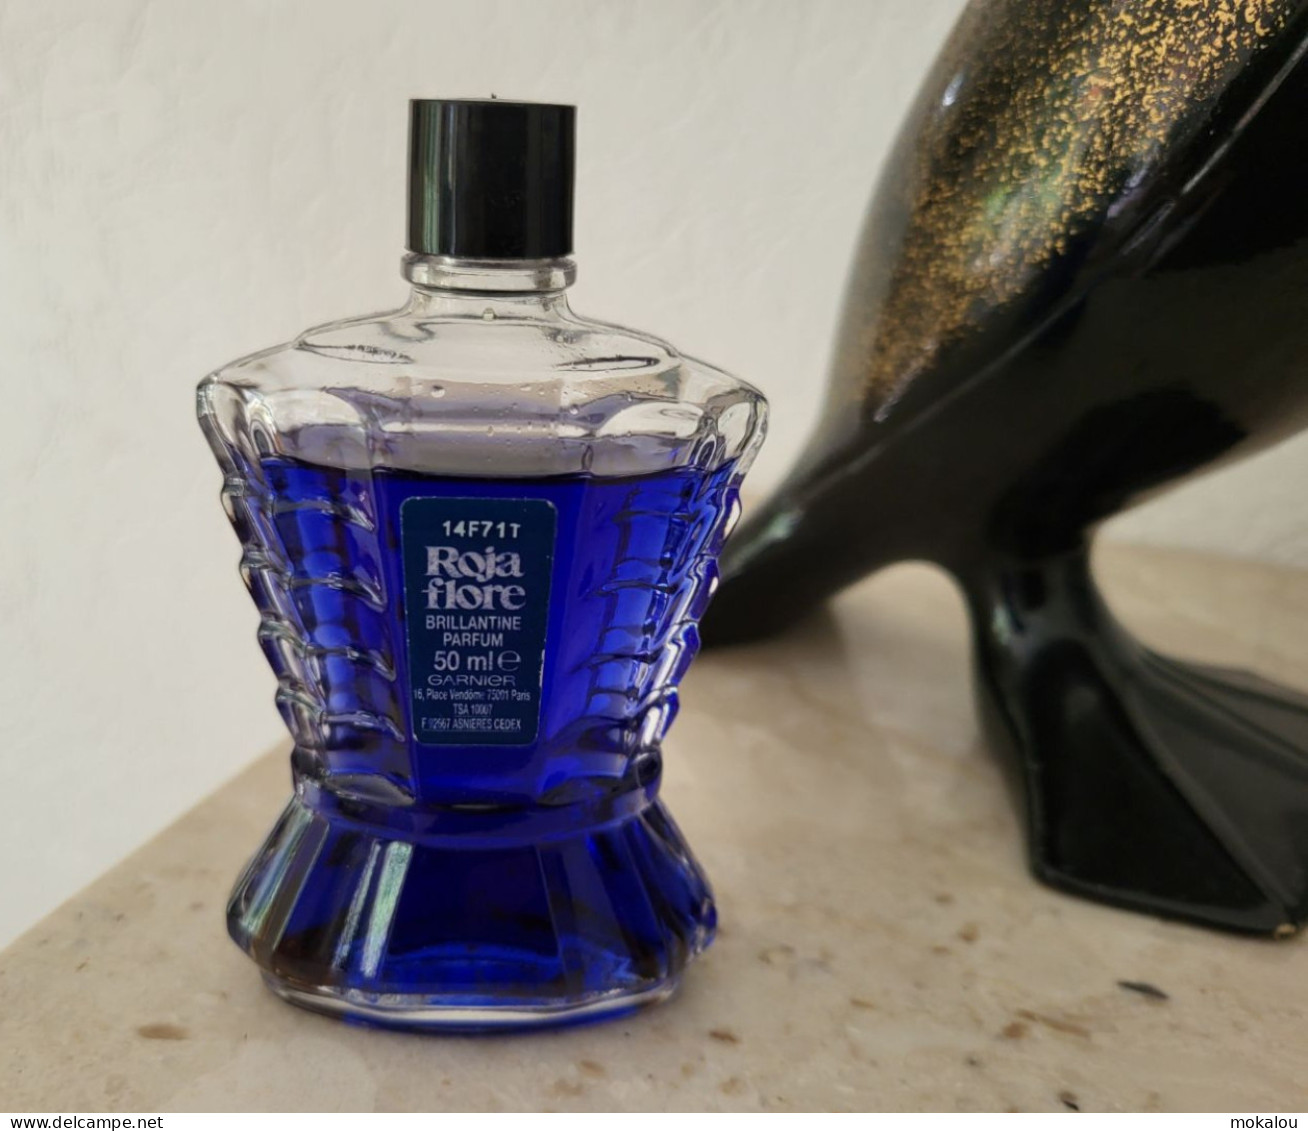 Flacon Forvil Rosa Flore Brillantine Parfum 50ml - Women